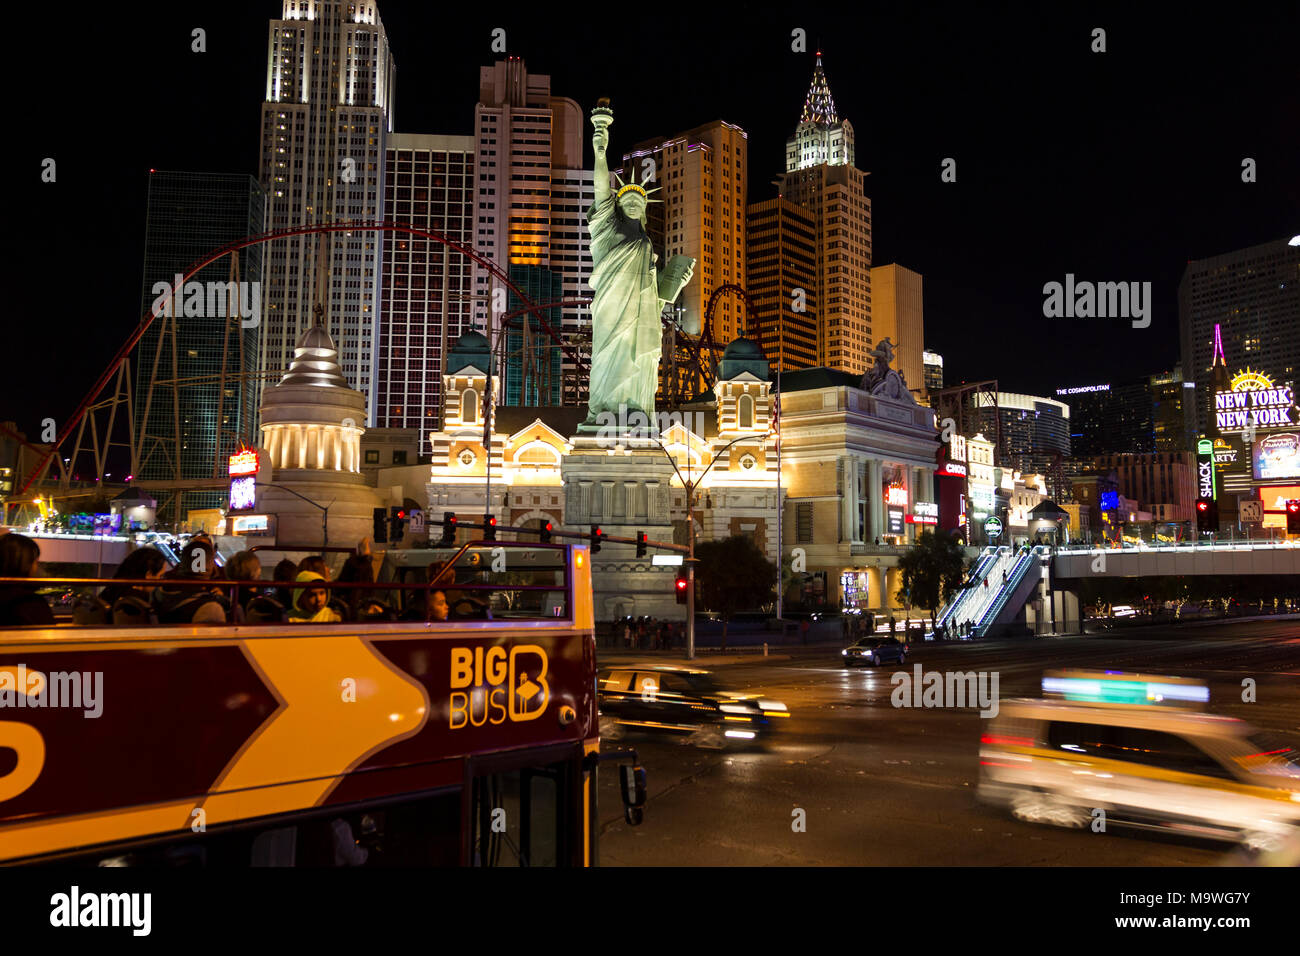 New York-New York seen from the Big Bus night tour. Las Vegas, Narvarda,  U.S.A Stock Photo - Alamy